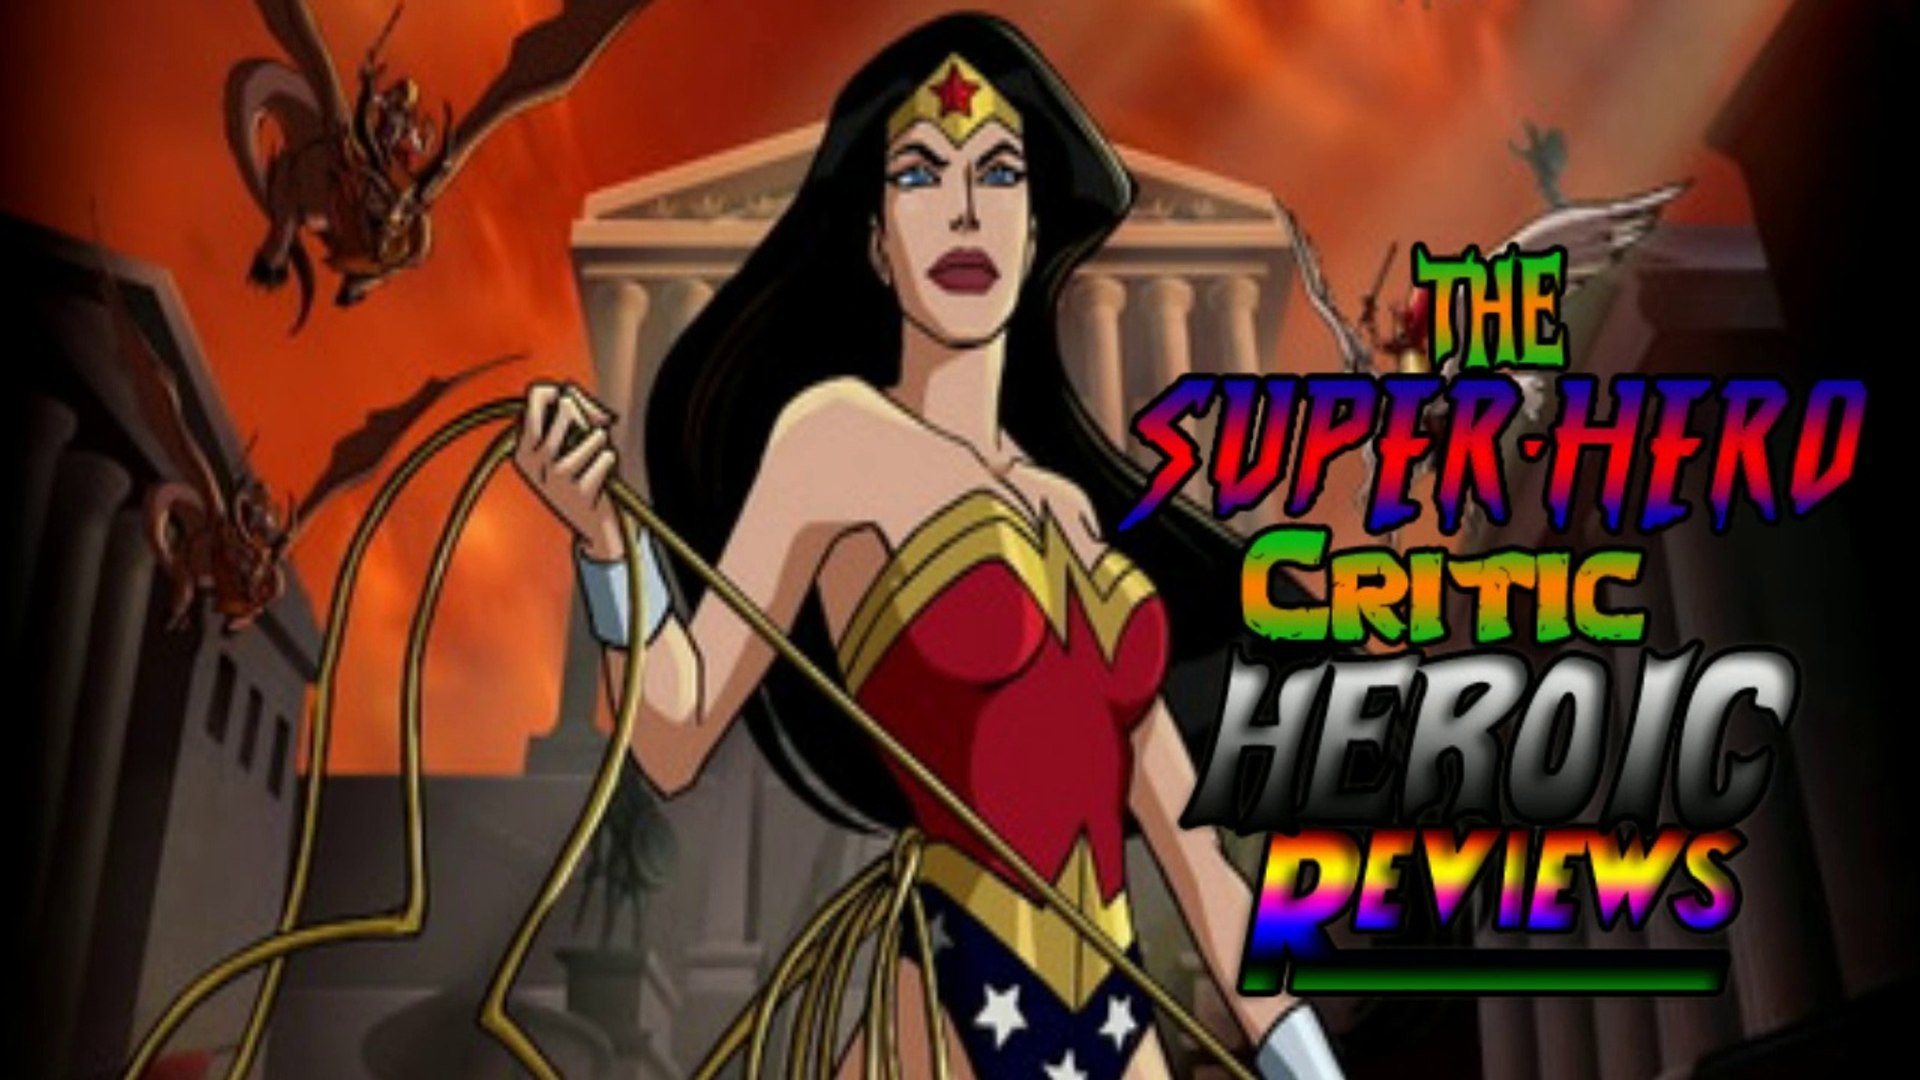 Wonder Woman Bloodlines Movie - video Dailymotion